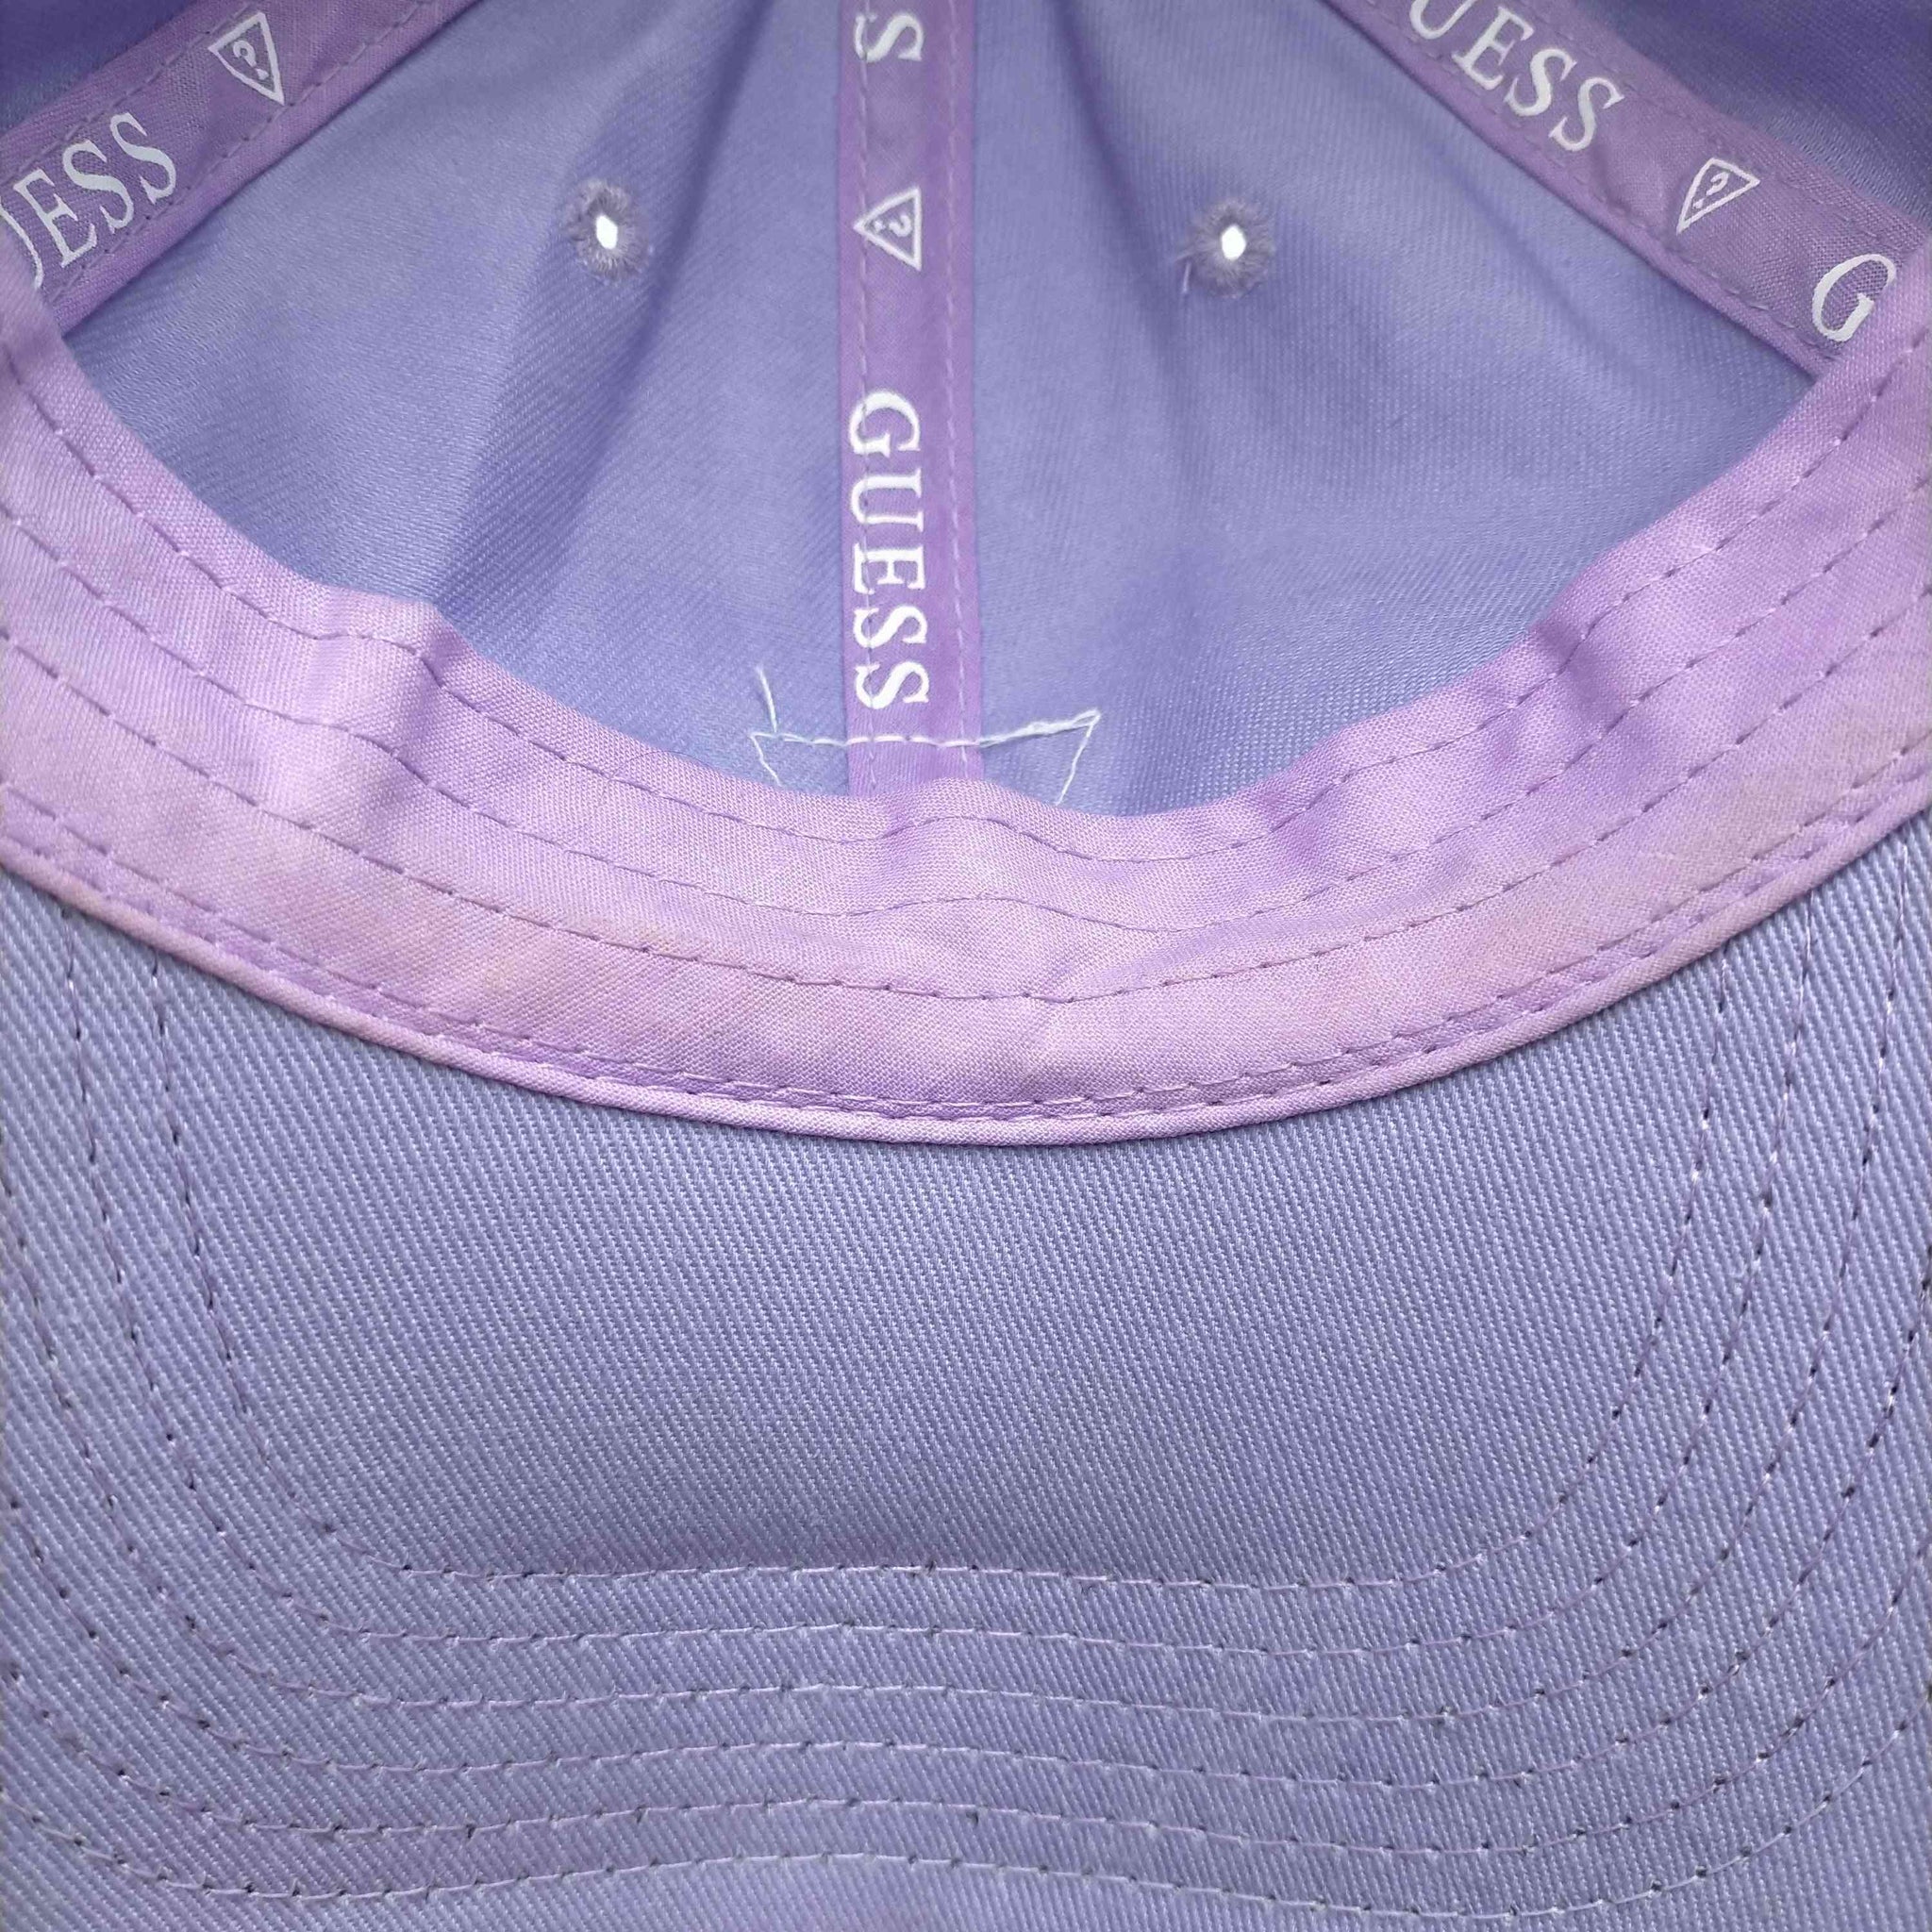 GUESS(ゲス)TRAIANGLE LOGO 6-PANEL CAP